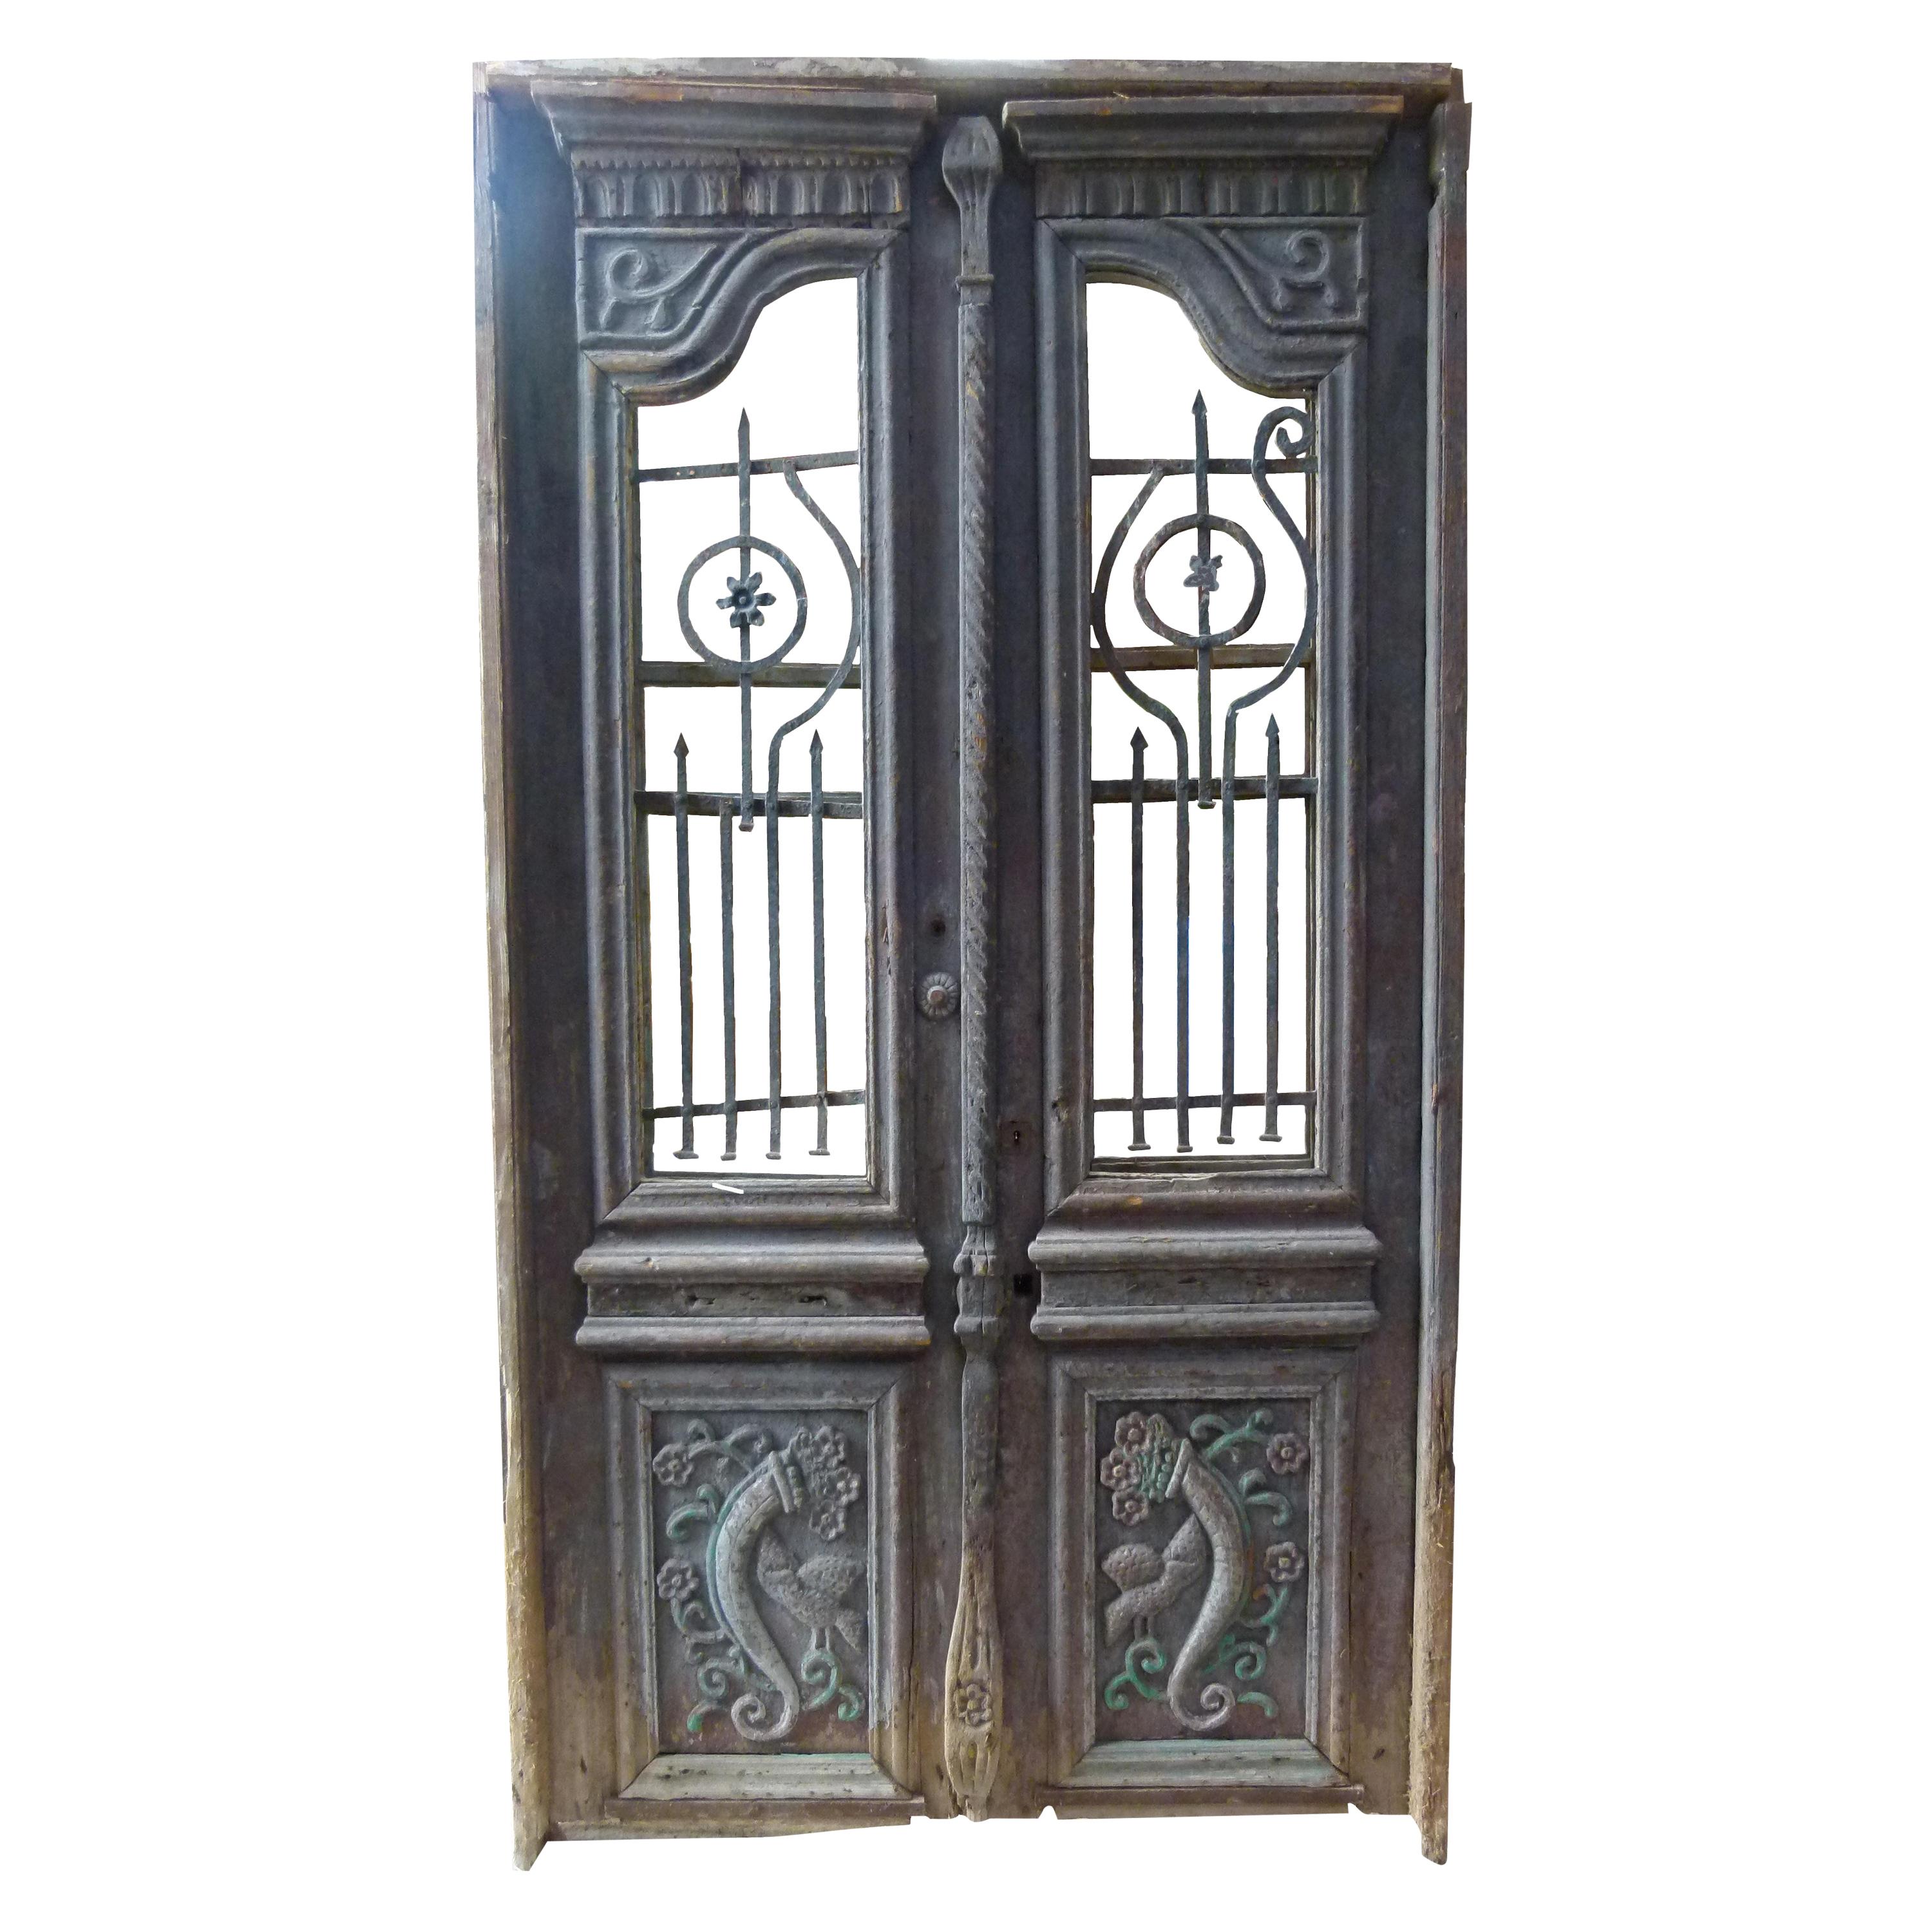 19th Century Wooden Double Front Door in Art Nouveau Style, Spain